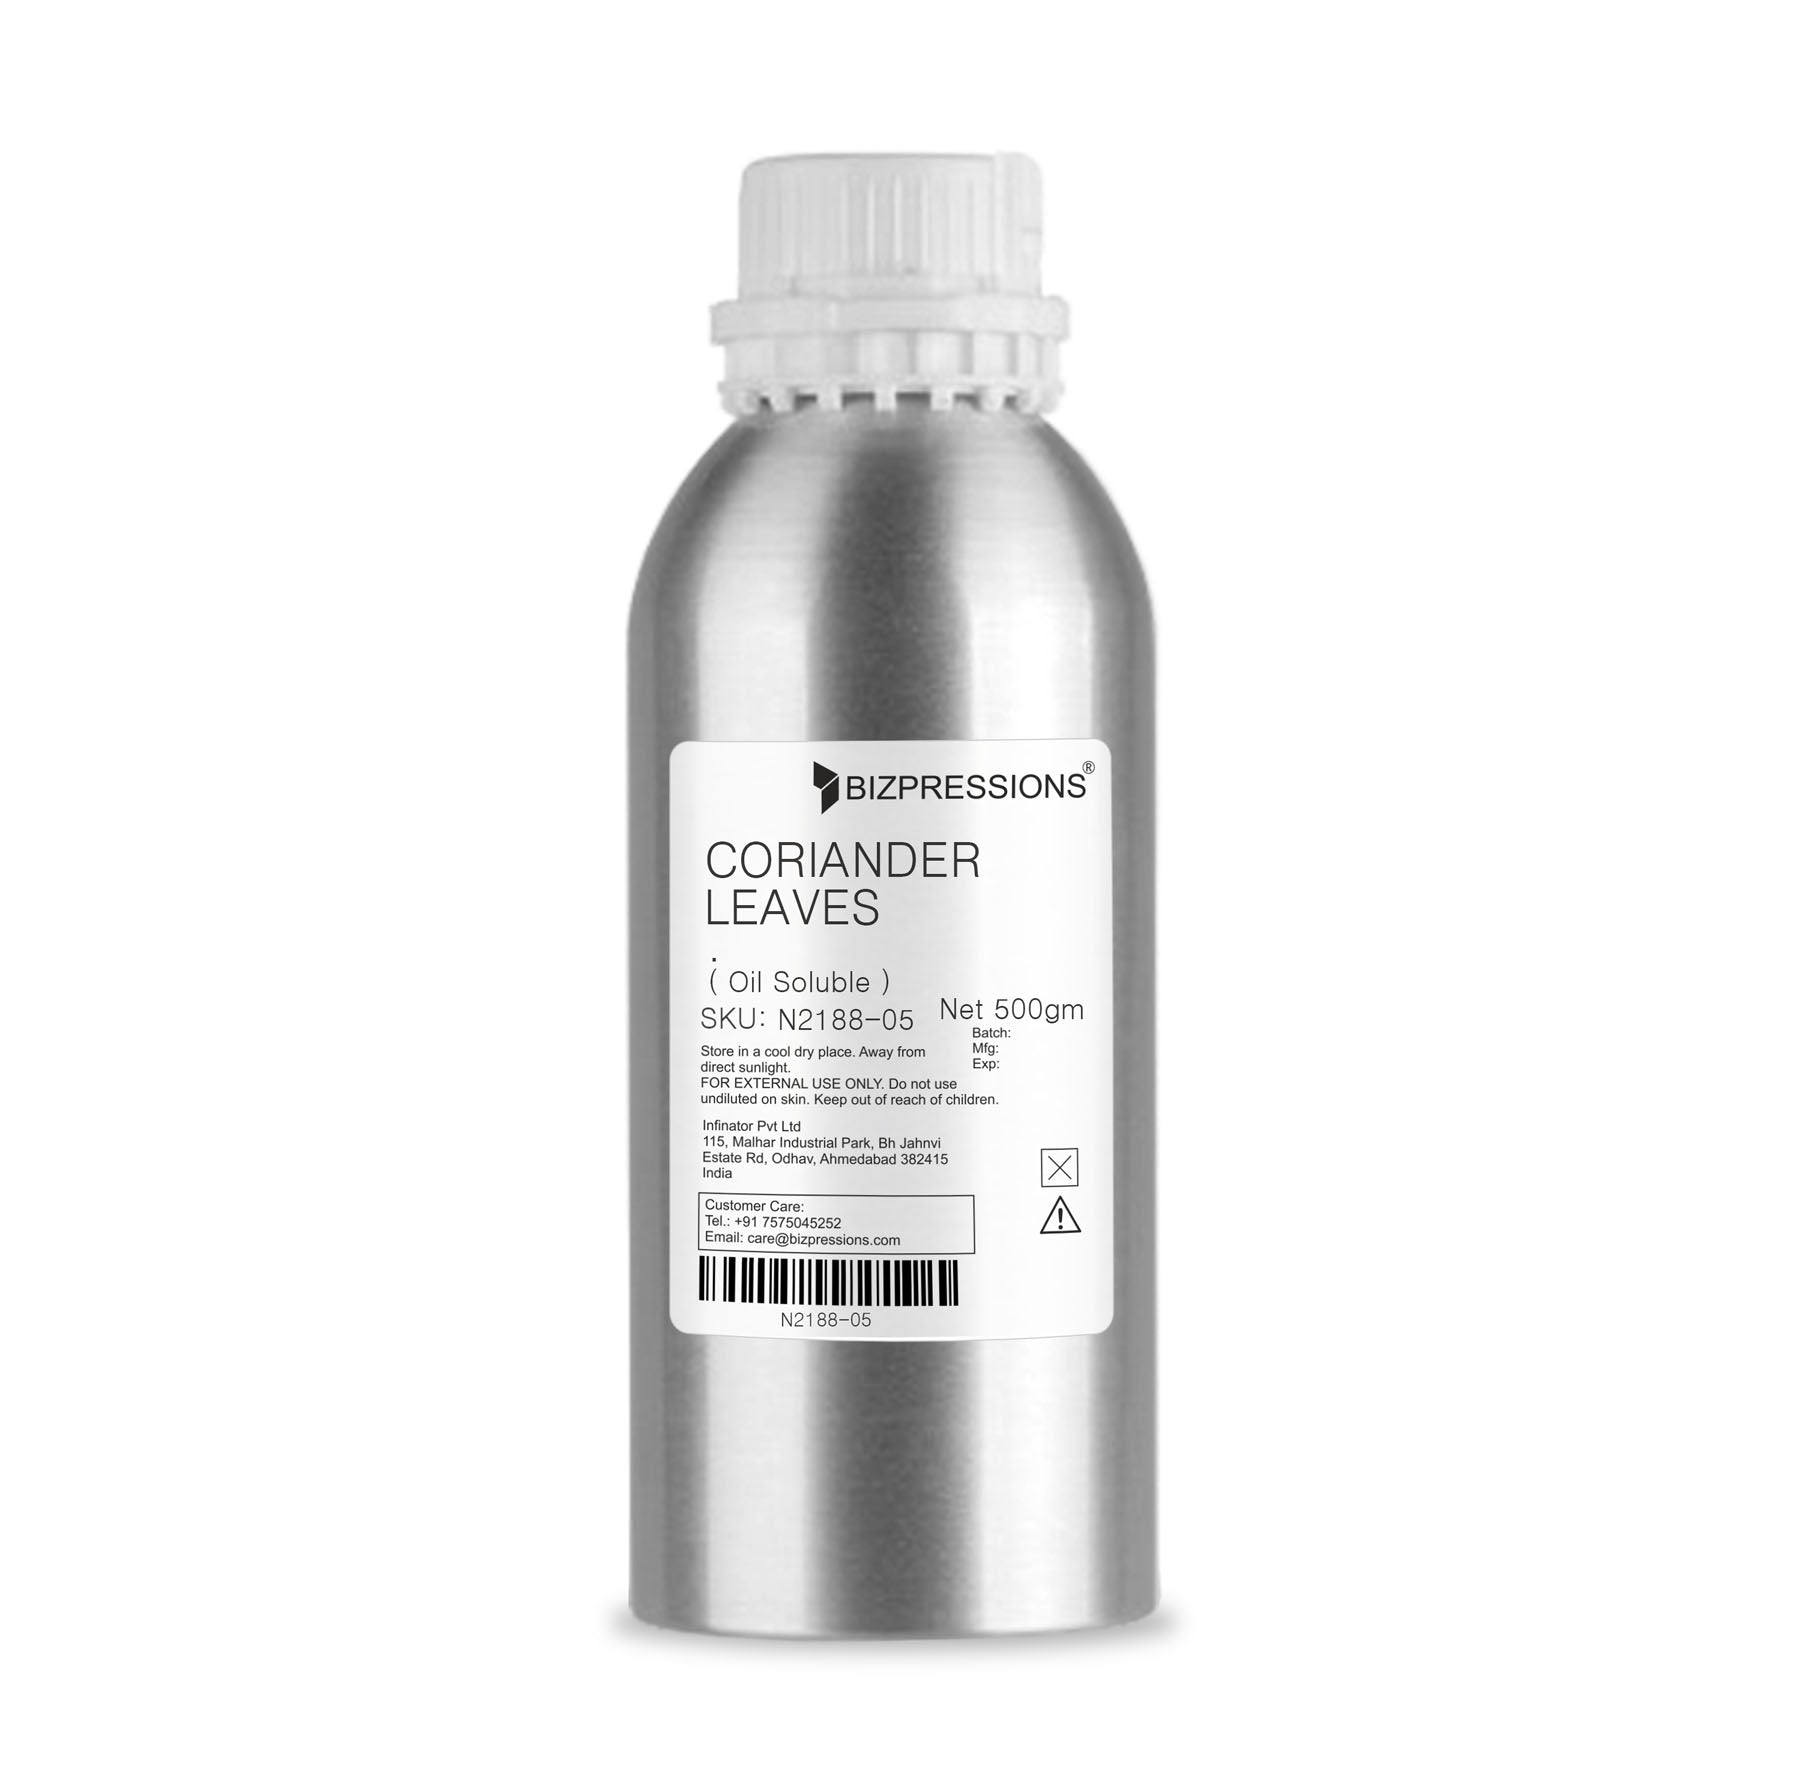 CORIANDER LEAVES - Fragrance ( Oil Soluble ) - 500 gm